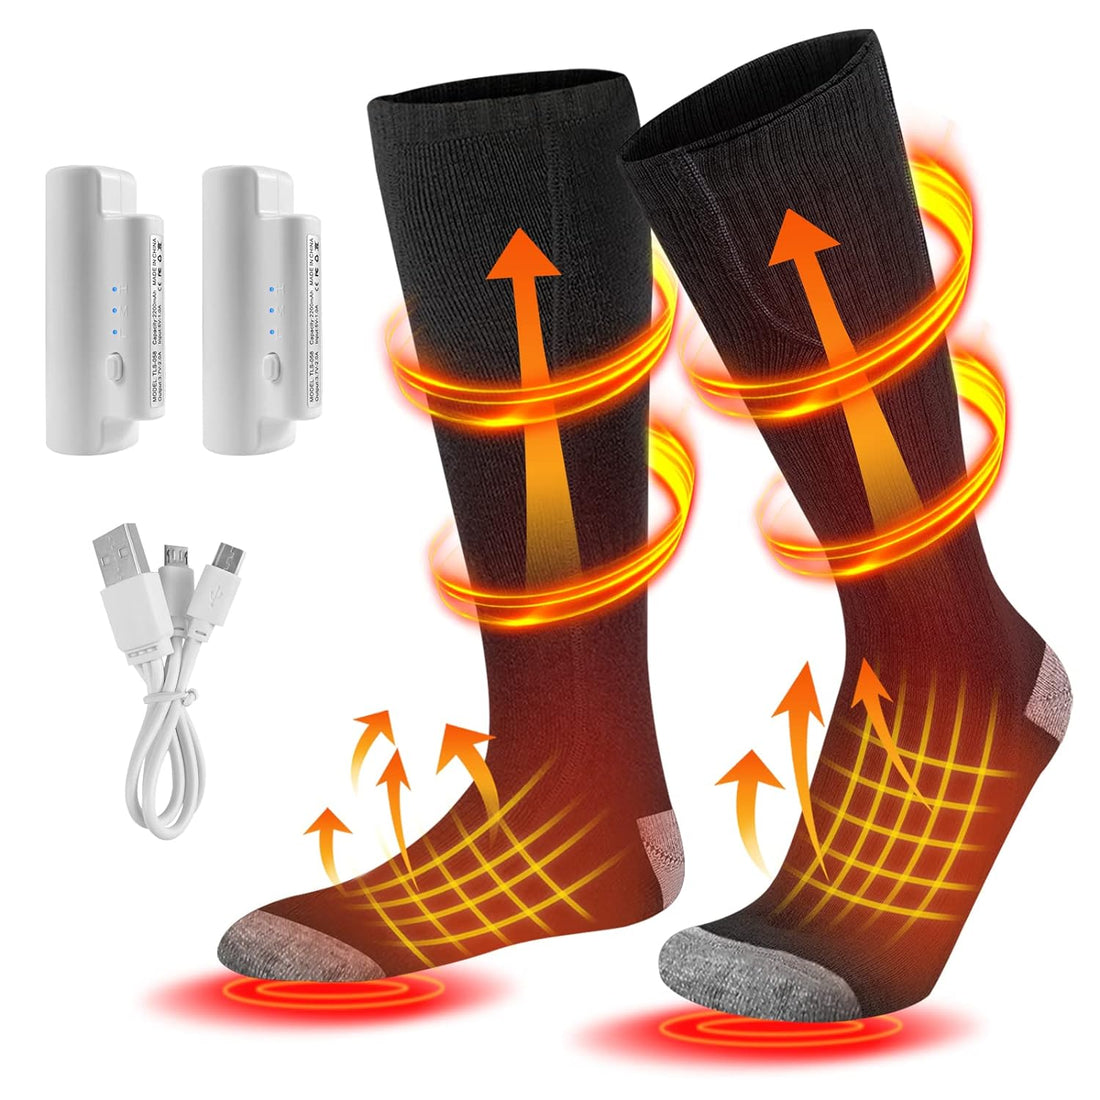 Heated Socks Electric Heating Socks Adjustable Rechargeable Foot Warmer Socks Unisex Heated Socks Thermal Winter Heated Socks for Outdoor Camping Hiking Skiing Hunting